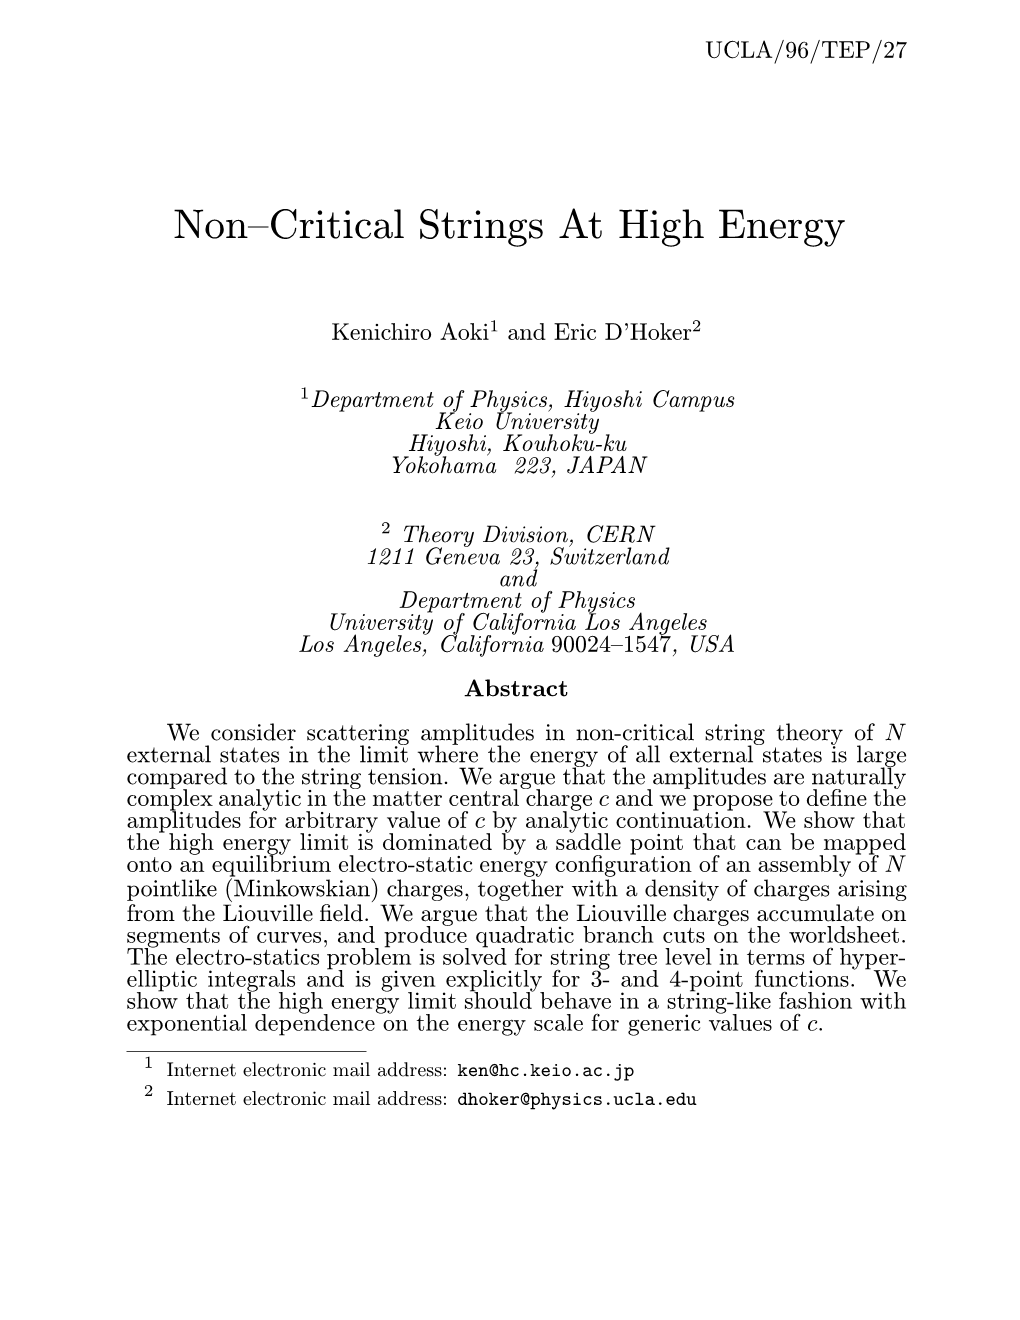 Non–Critical Strings at High Energy